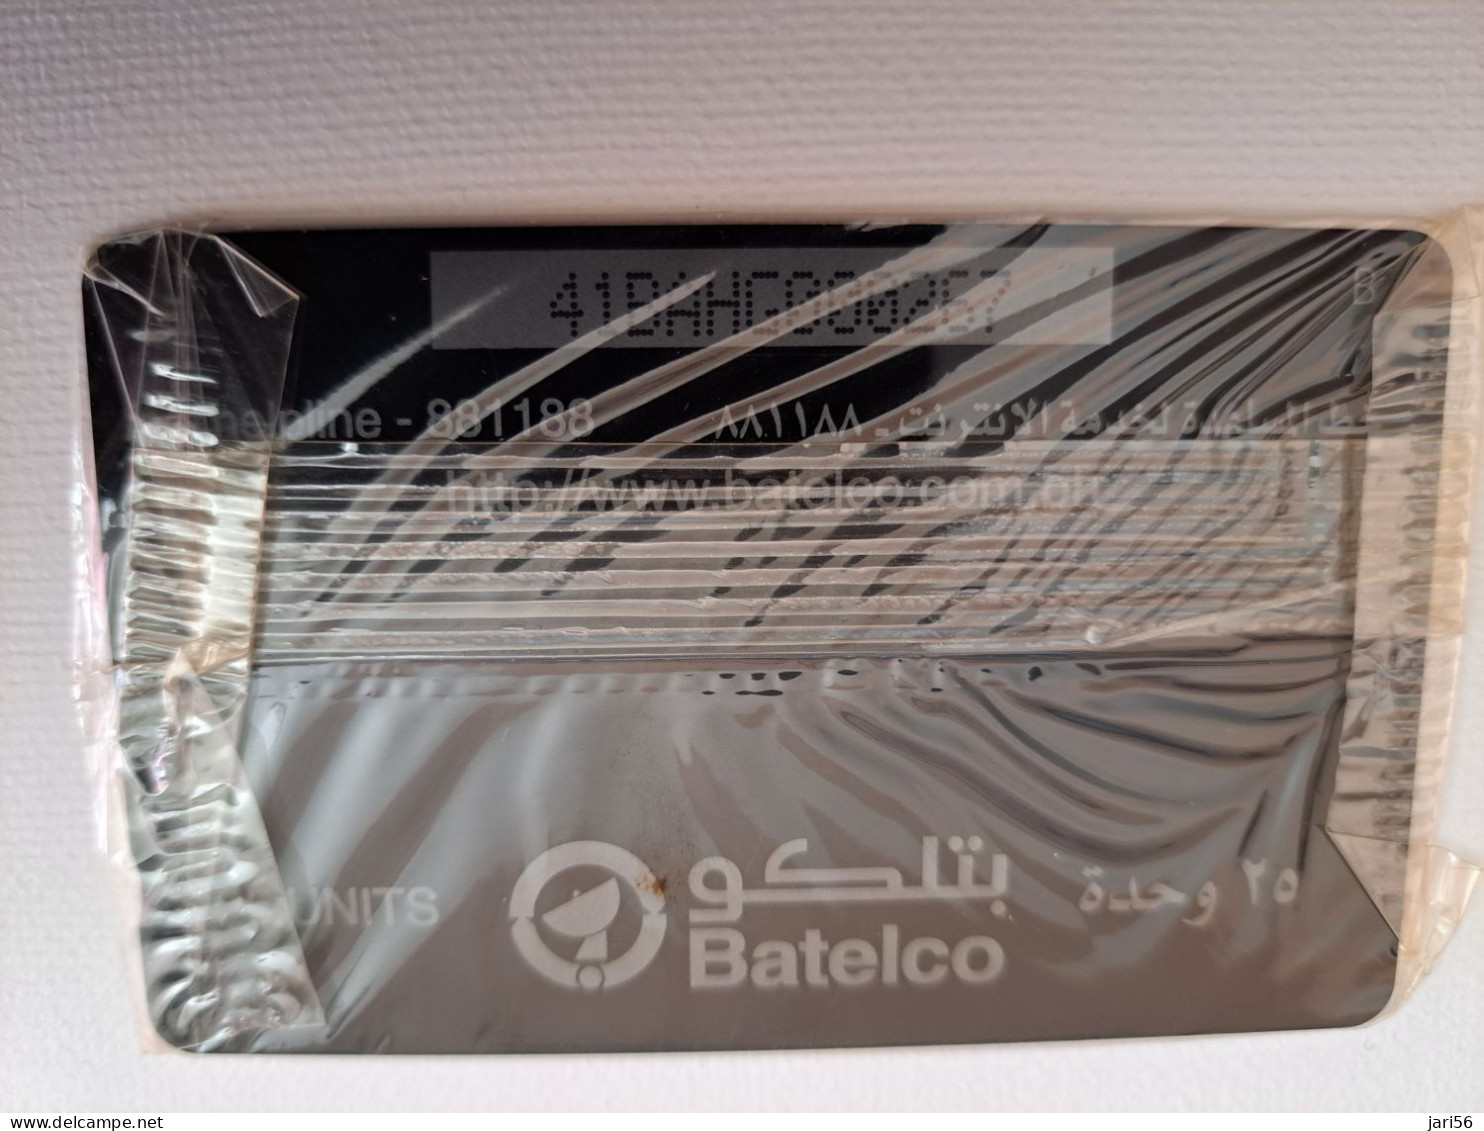 BAHRAIN   GPT CARD  25 UNITS/   /  MINT CARD IN WRAPPER/ INET/  !!!  / BHN76  / 41BAHG /SHALLOW  NOTCH   **13537** - Bahrein